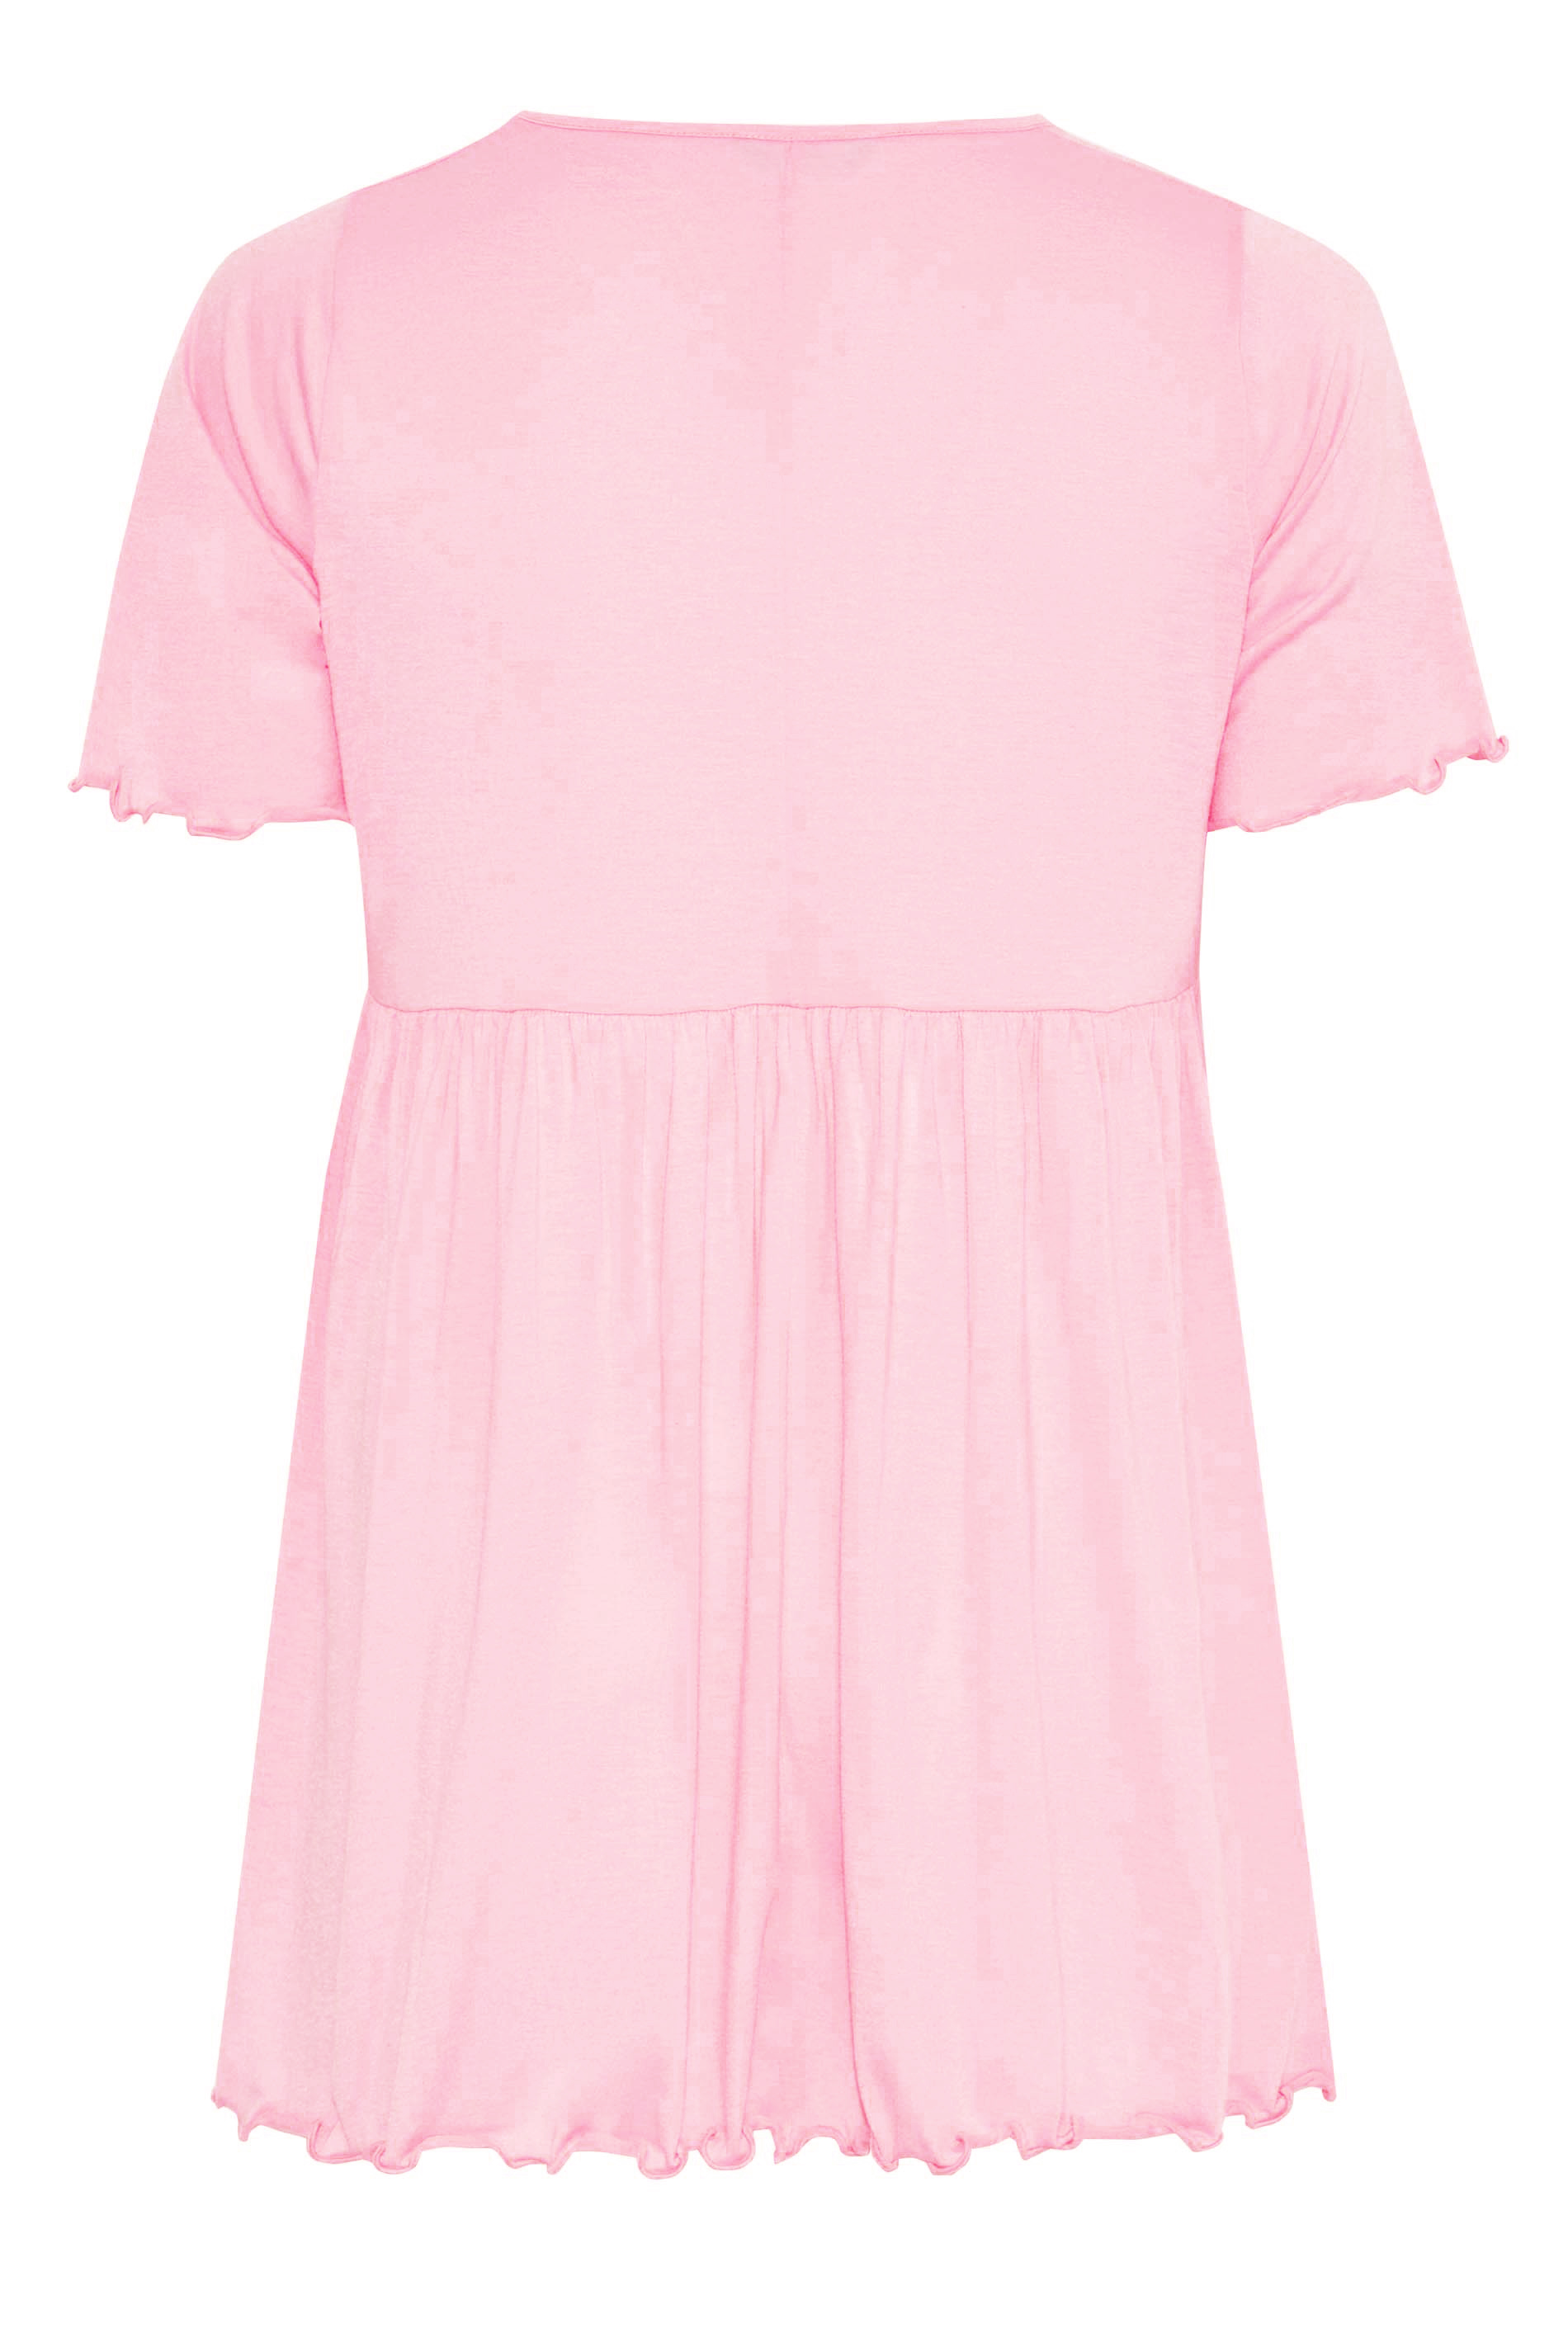 Grande taille  Tops Grande taille  T-Shirts | LIMITED COLLECTION - Top Rose Pastel Peplum Volanté - JK02003